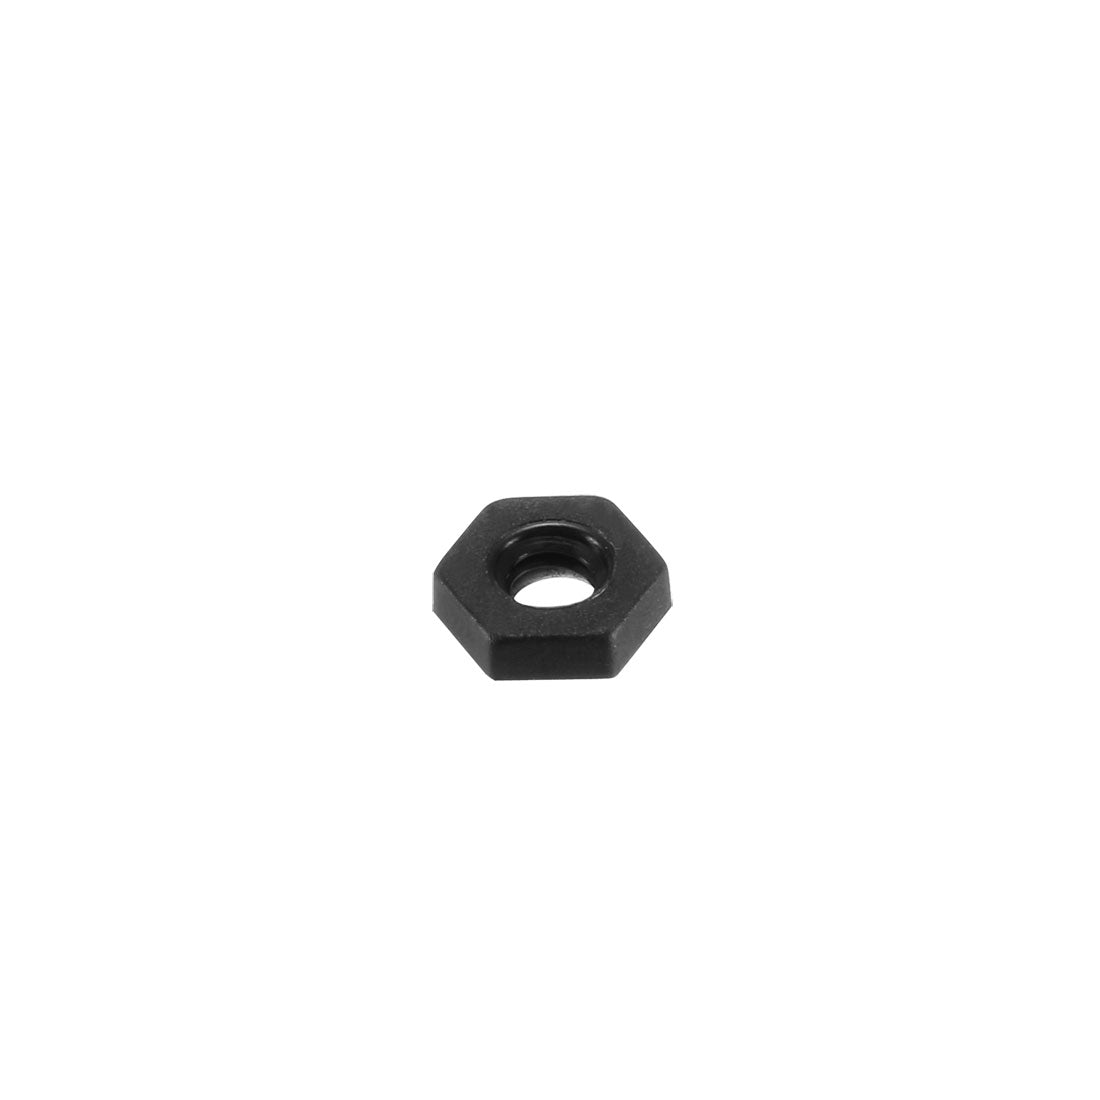 uxcell Uxcell Hex Nut, Metric Nylon M2x0.4mm Thread Hexagon Nuts Black 100pcs